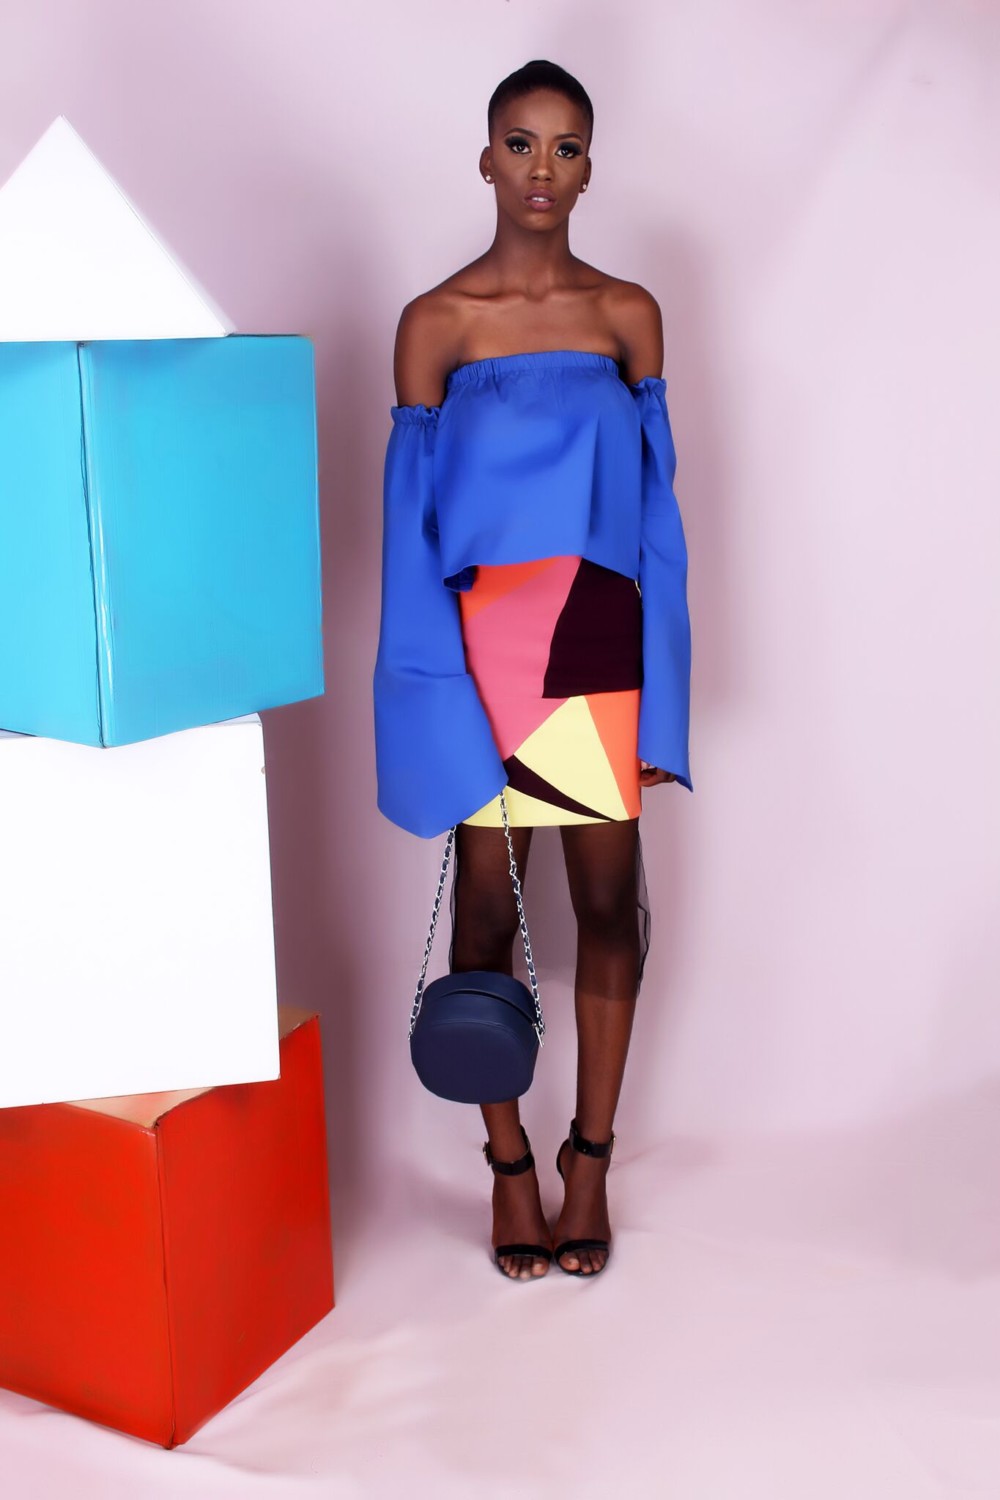 Nigerian Fashion Brand CeCe launches its Latest Lookbook titled 'Kandinsky'